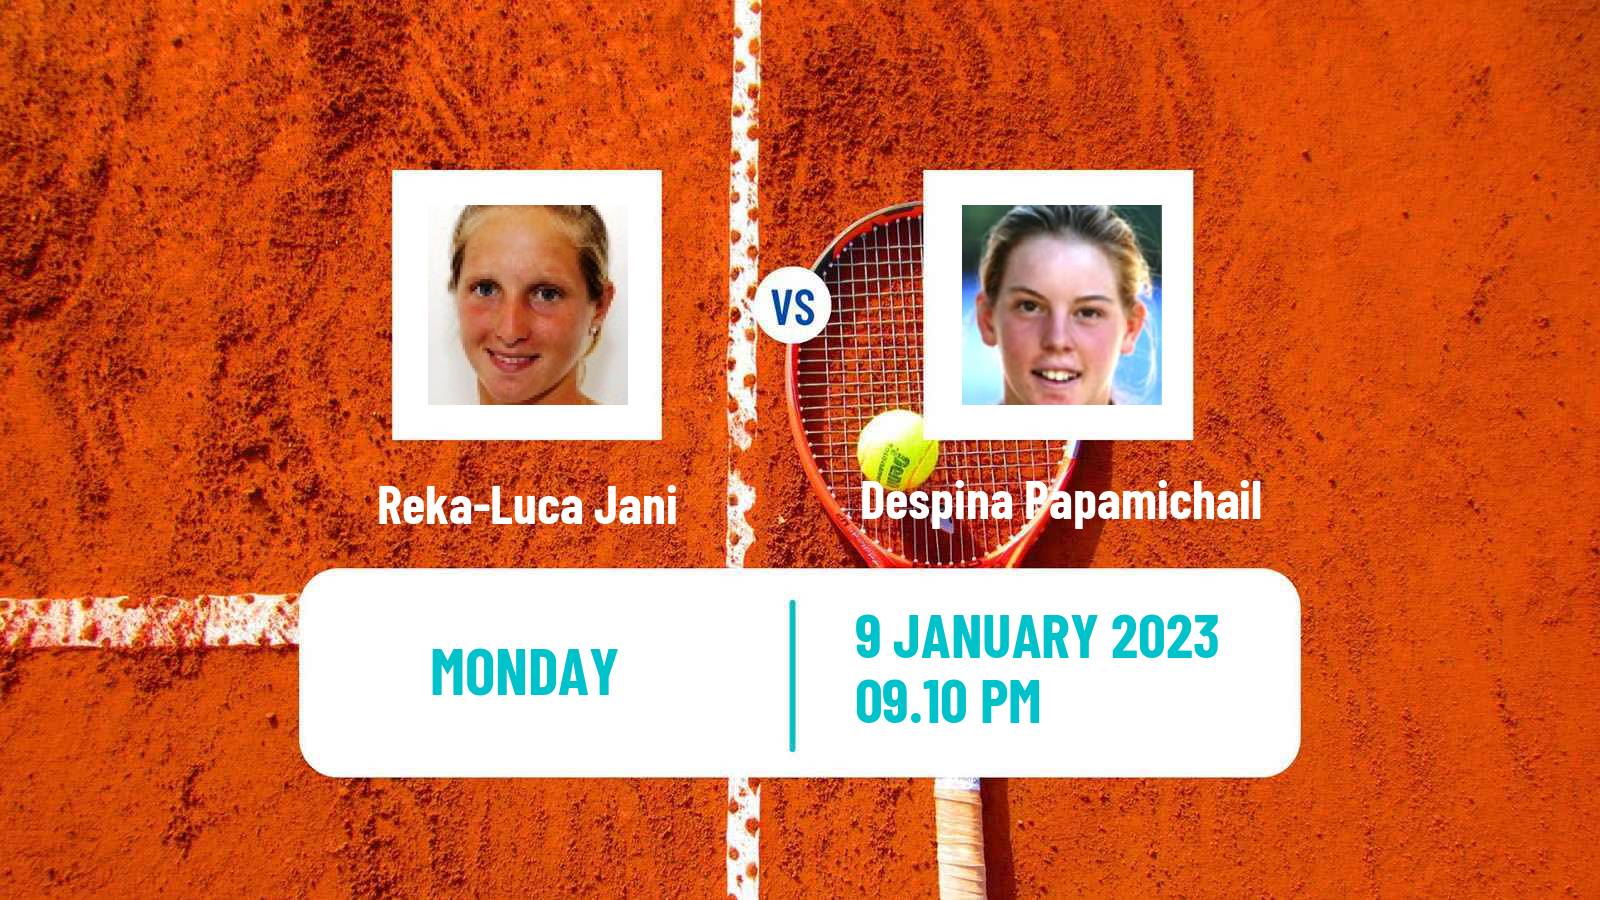 Tennis WTA Australian Open Reka-Luca Jani - Despina Papamichail